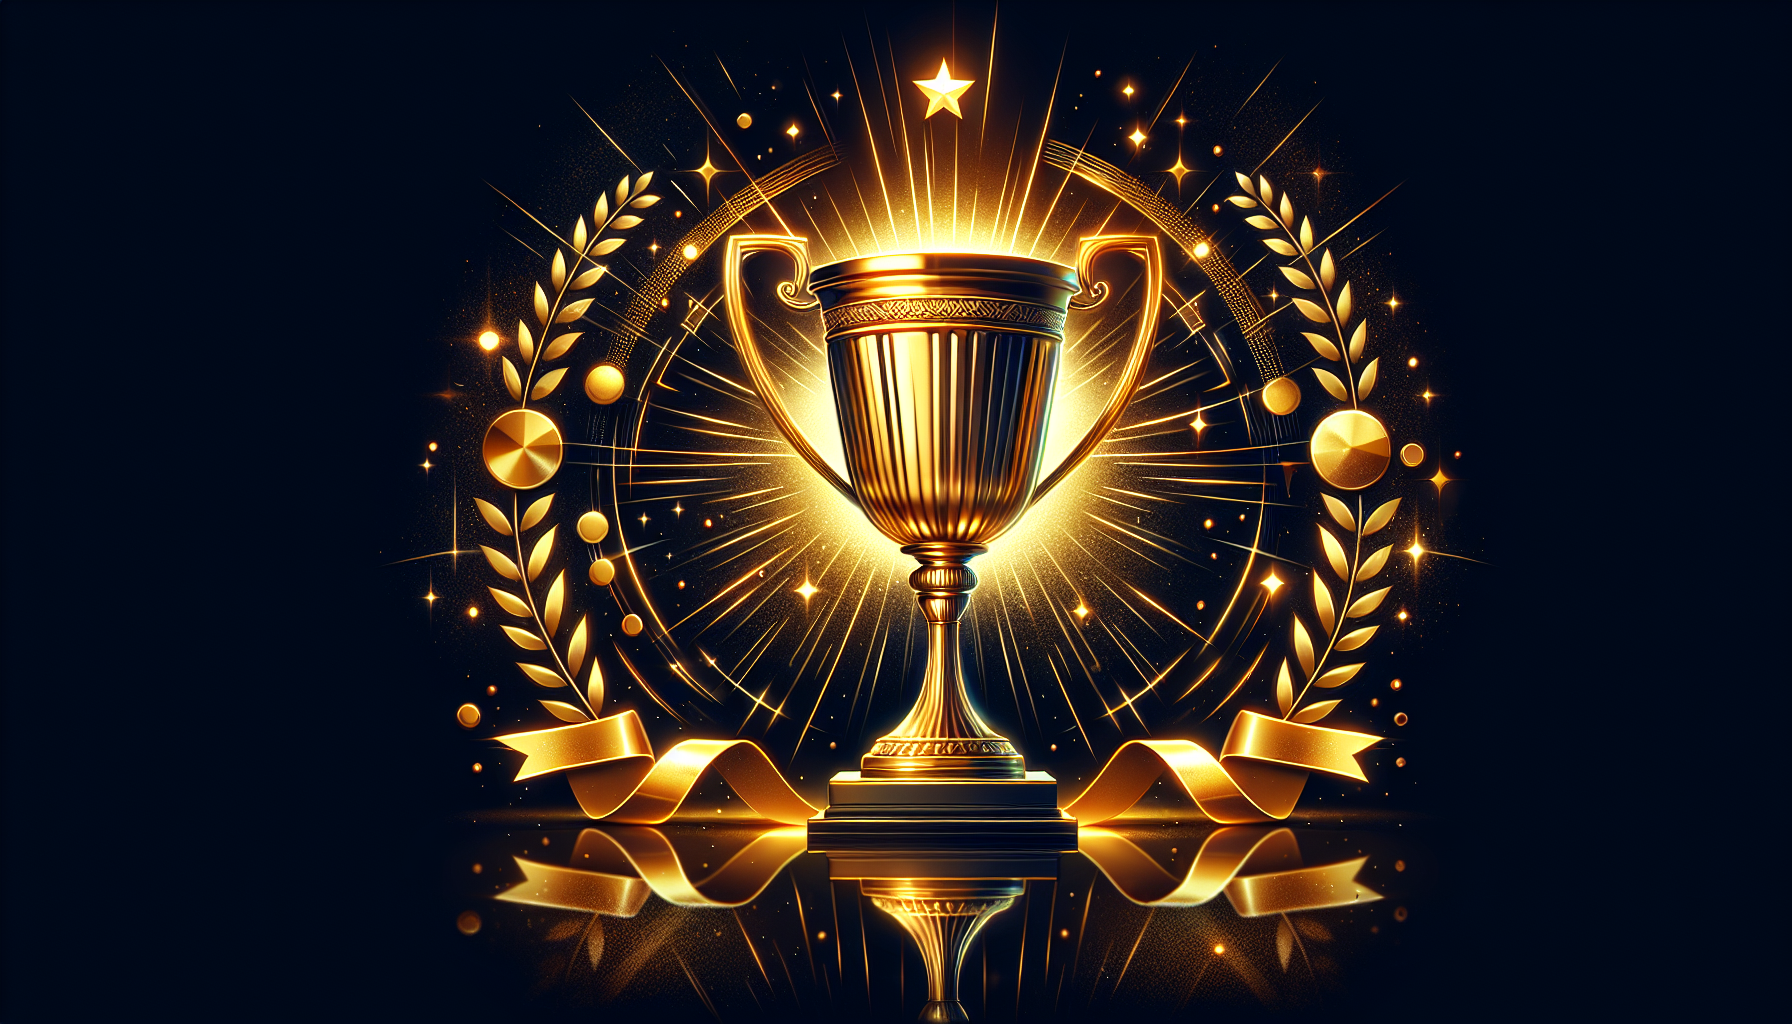 Artistic illustration of a shining trophy symbolizing achievement